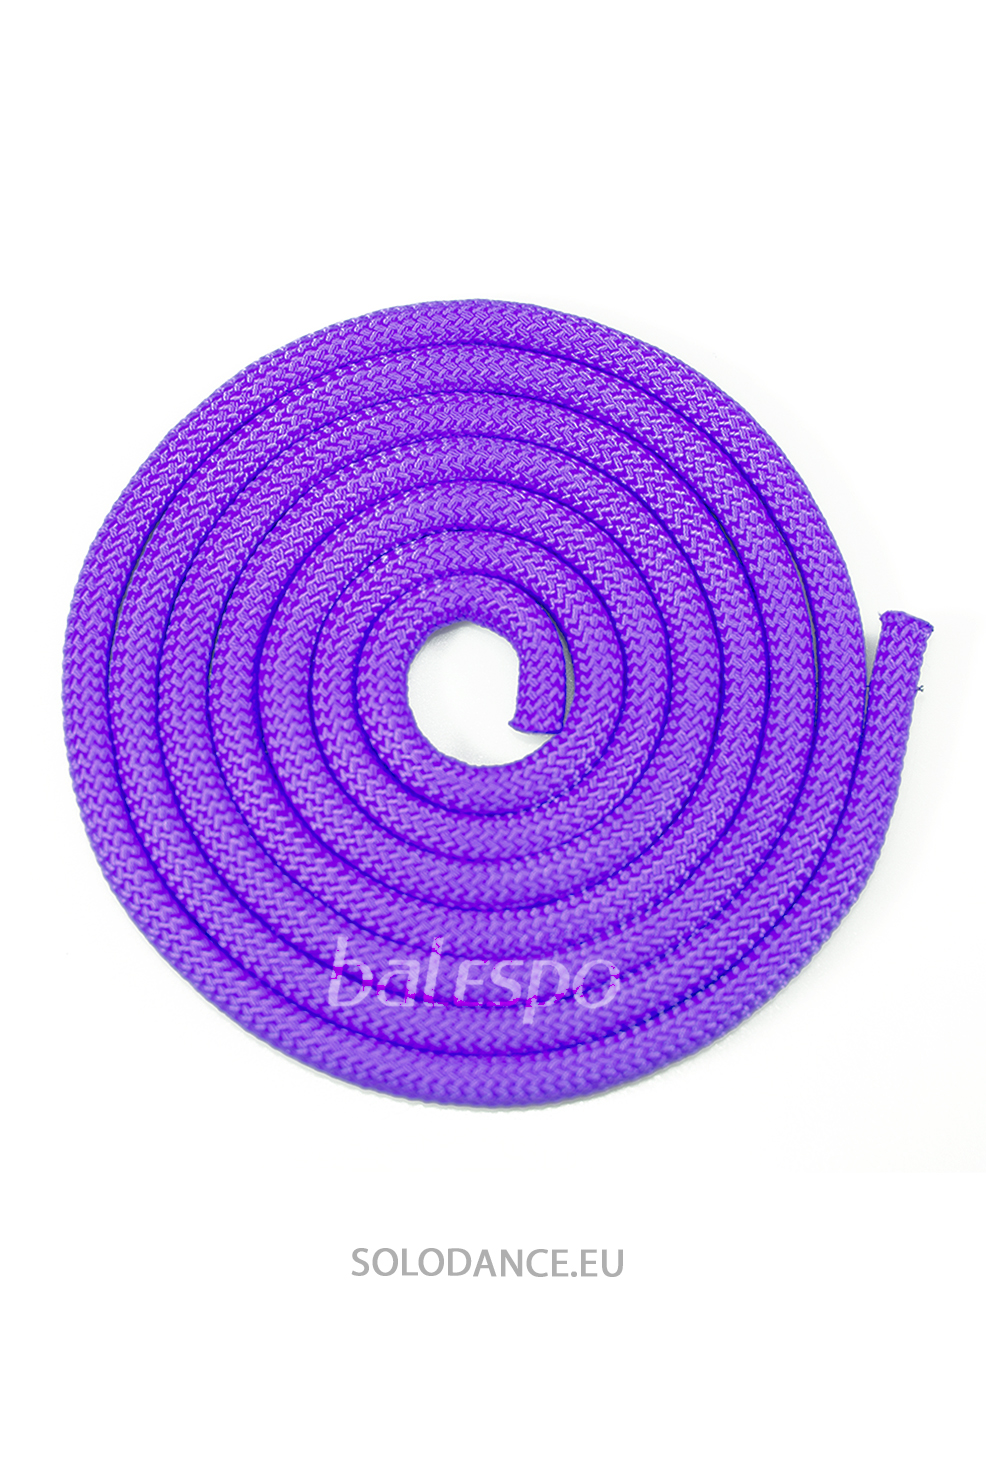 Gymnastic rope BALESPO purple 2,5 m